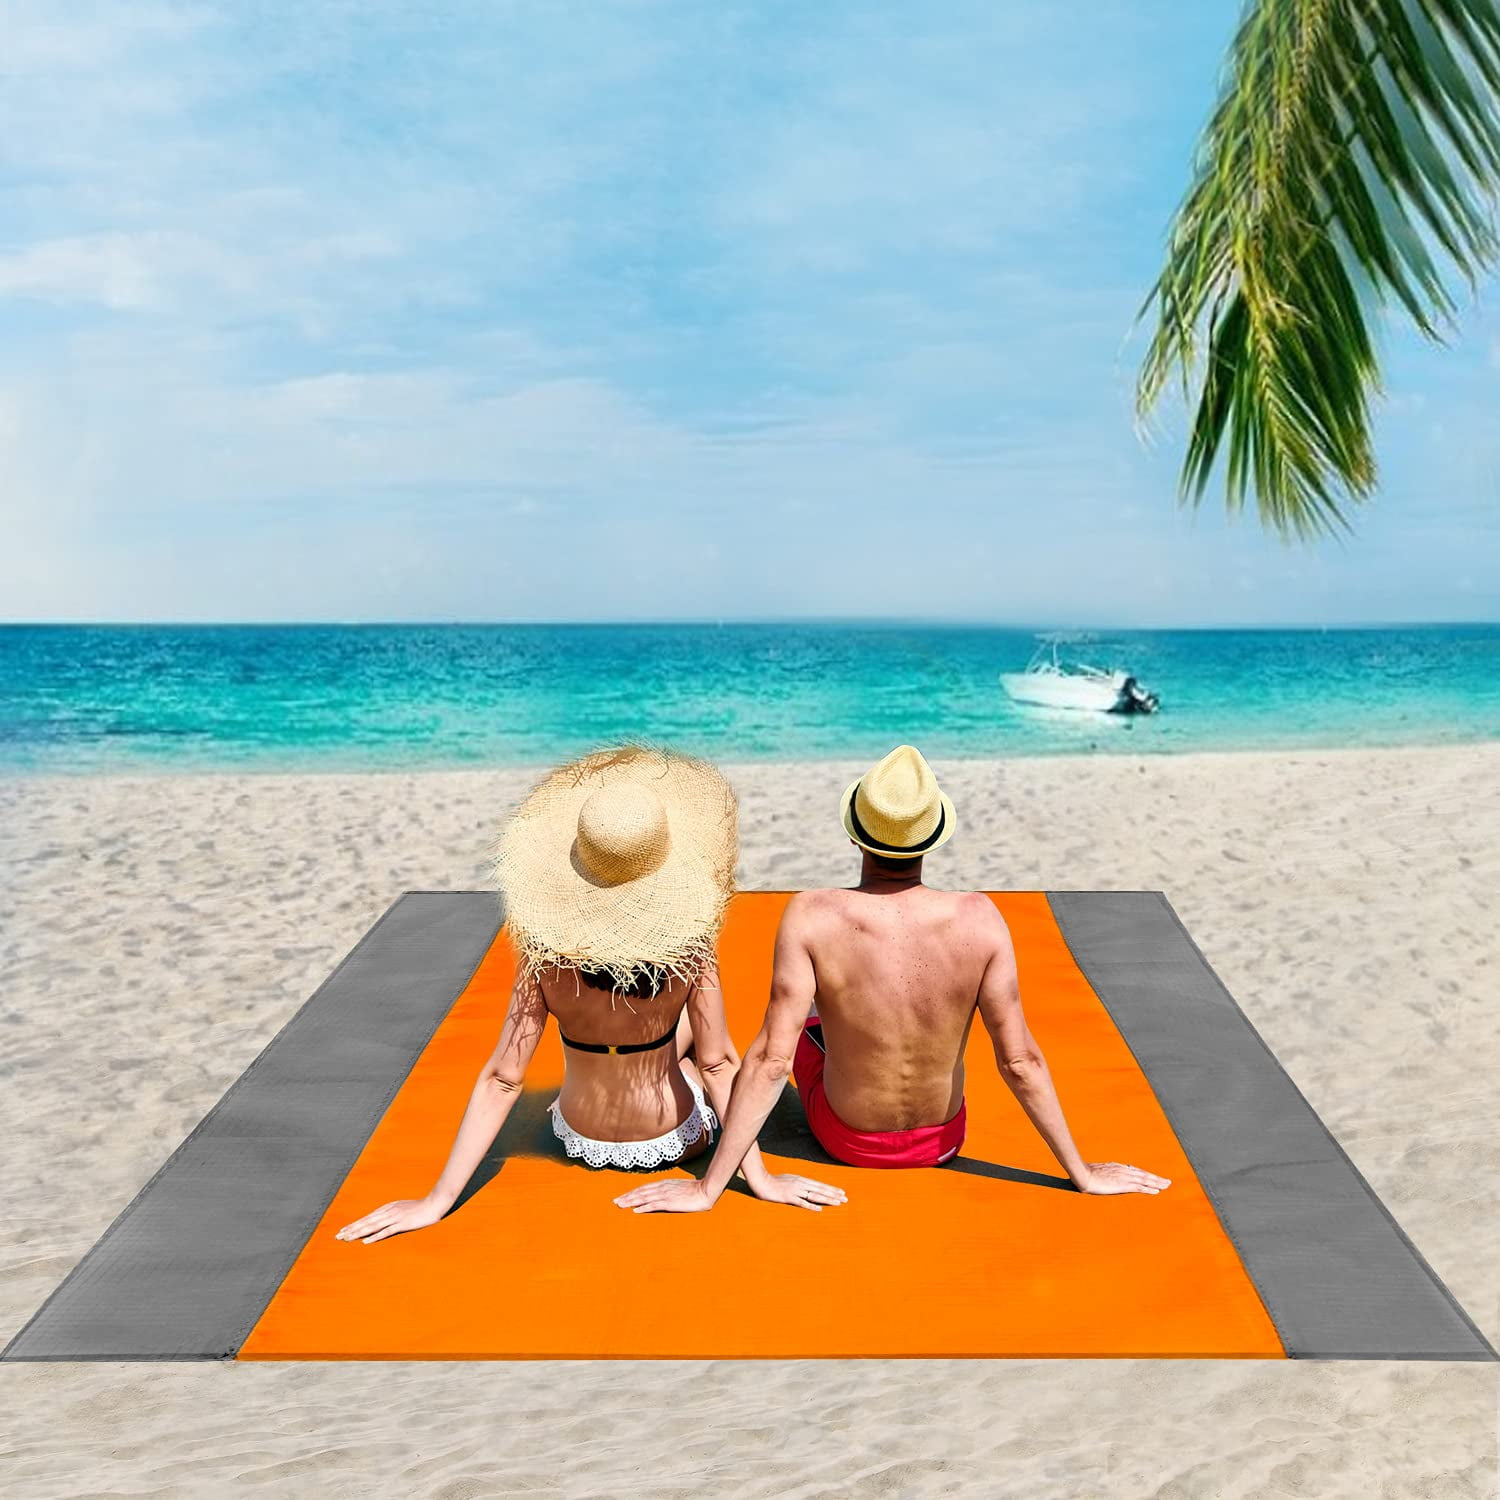 Sandfree Beach Blanket Extra Large Sandproof Waterproof Picnic Mat Set Beach Mat 